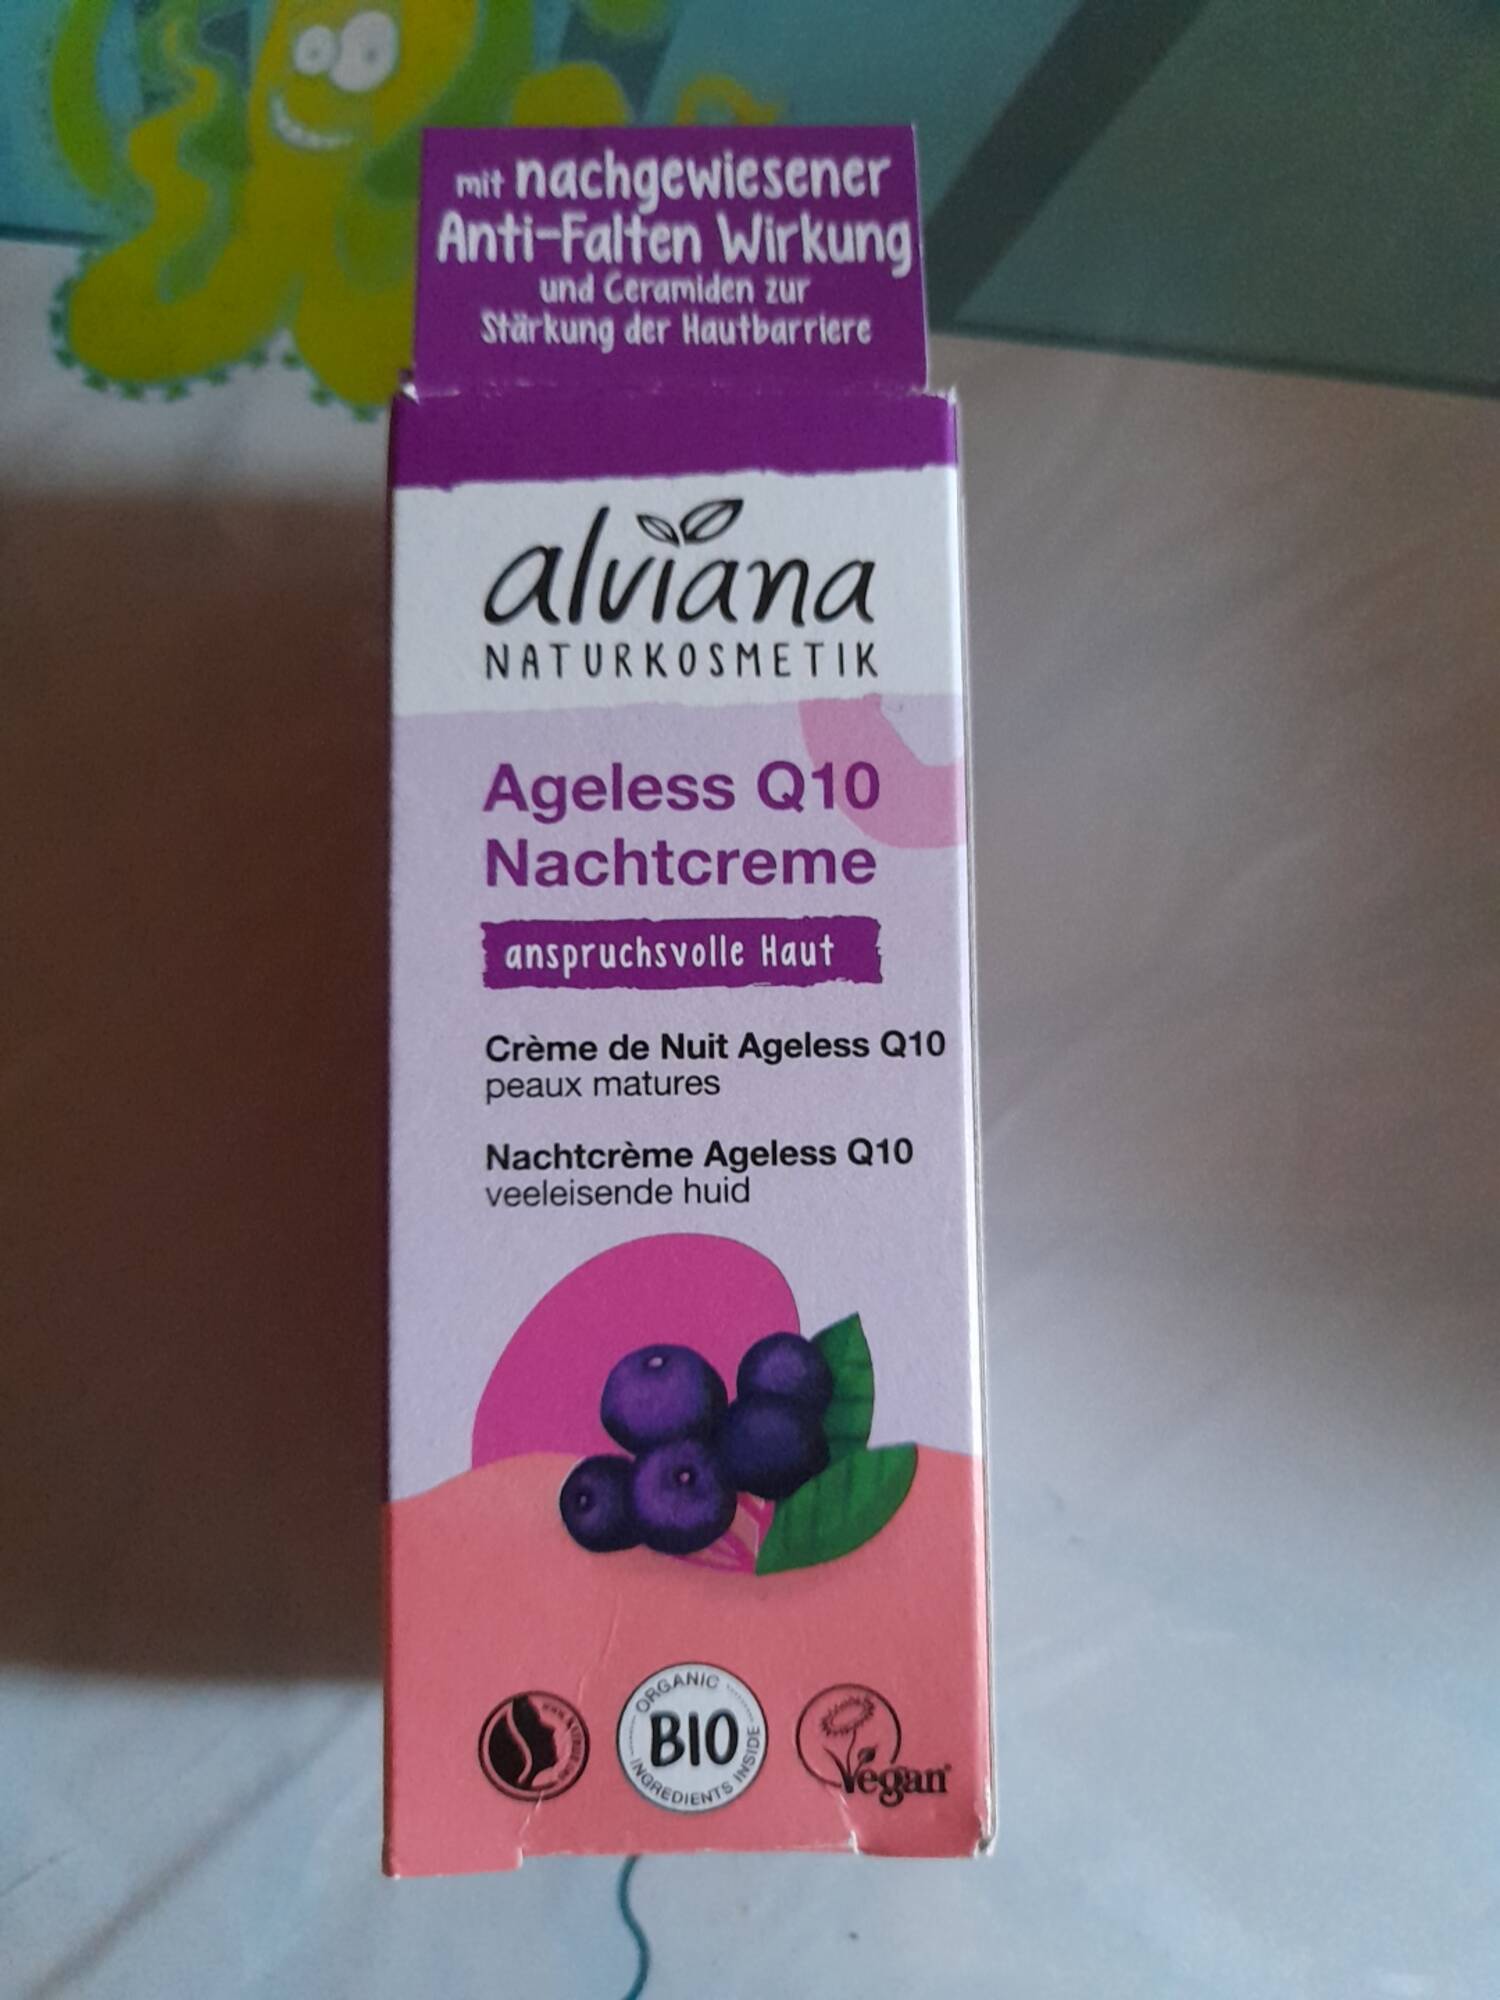 ALVIANA - Ageless Q10 nachtcreme